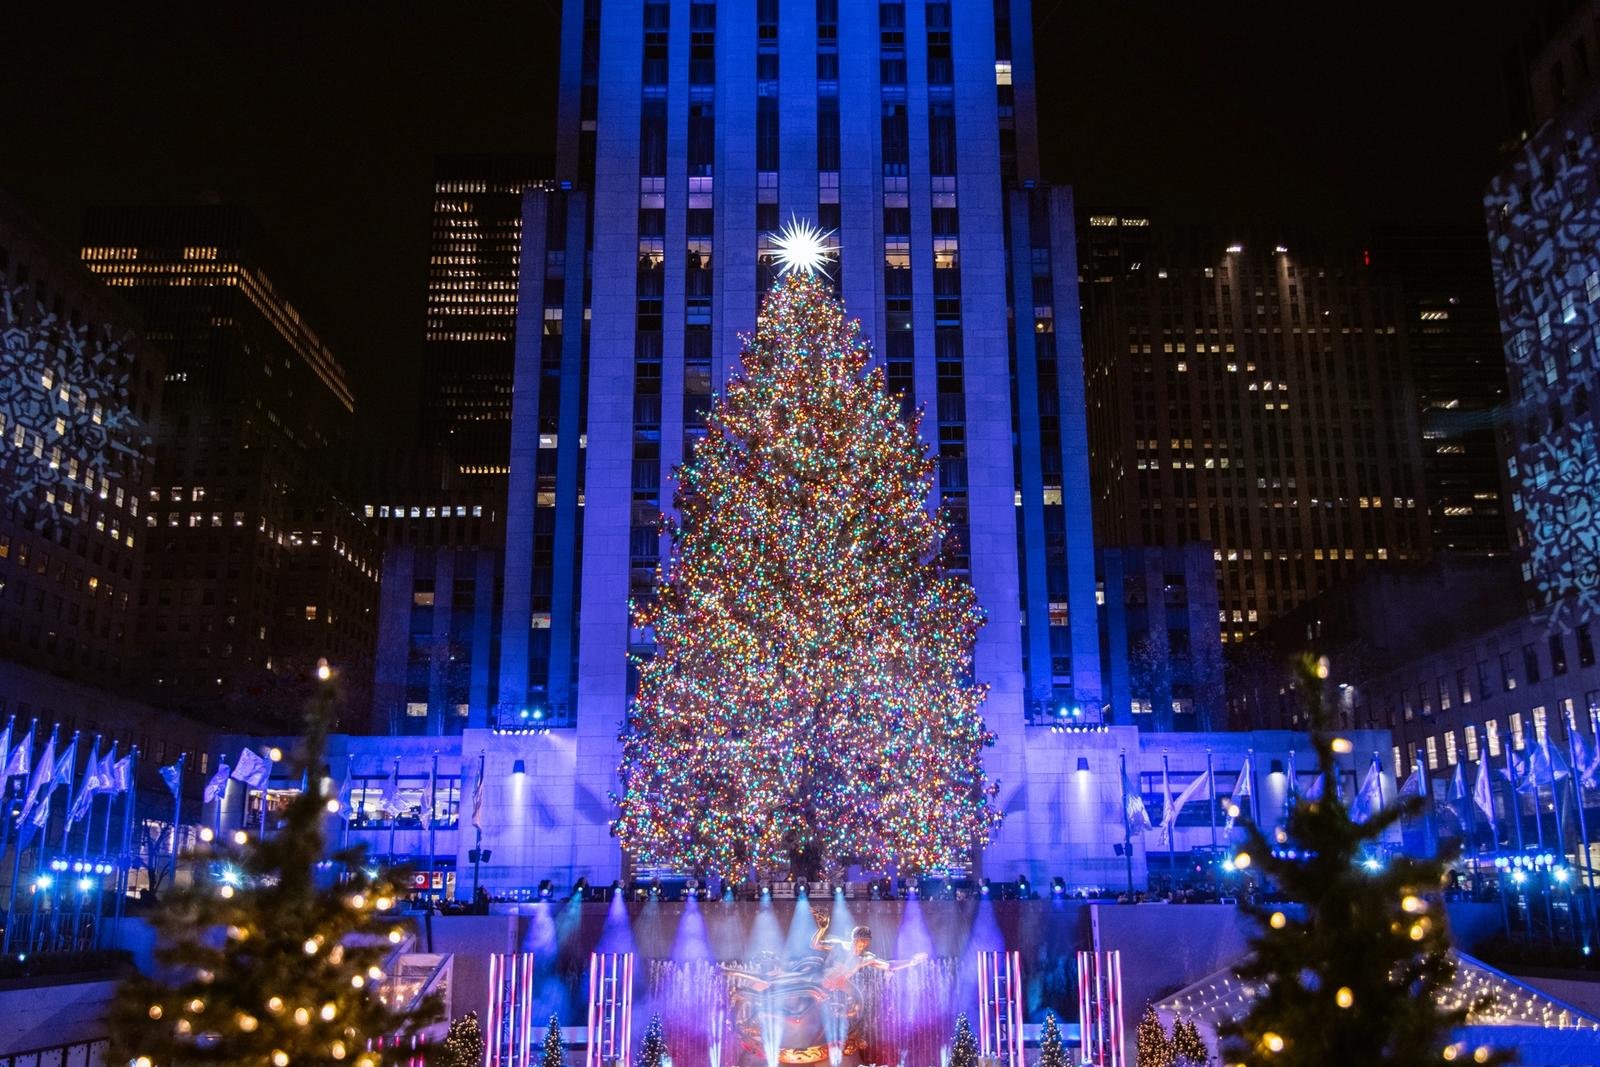 christmas trees with lights